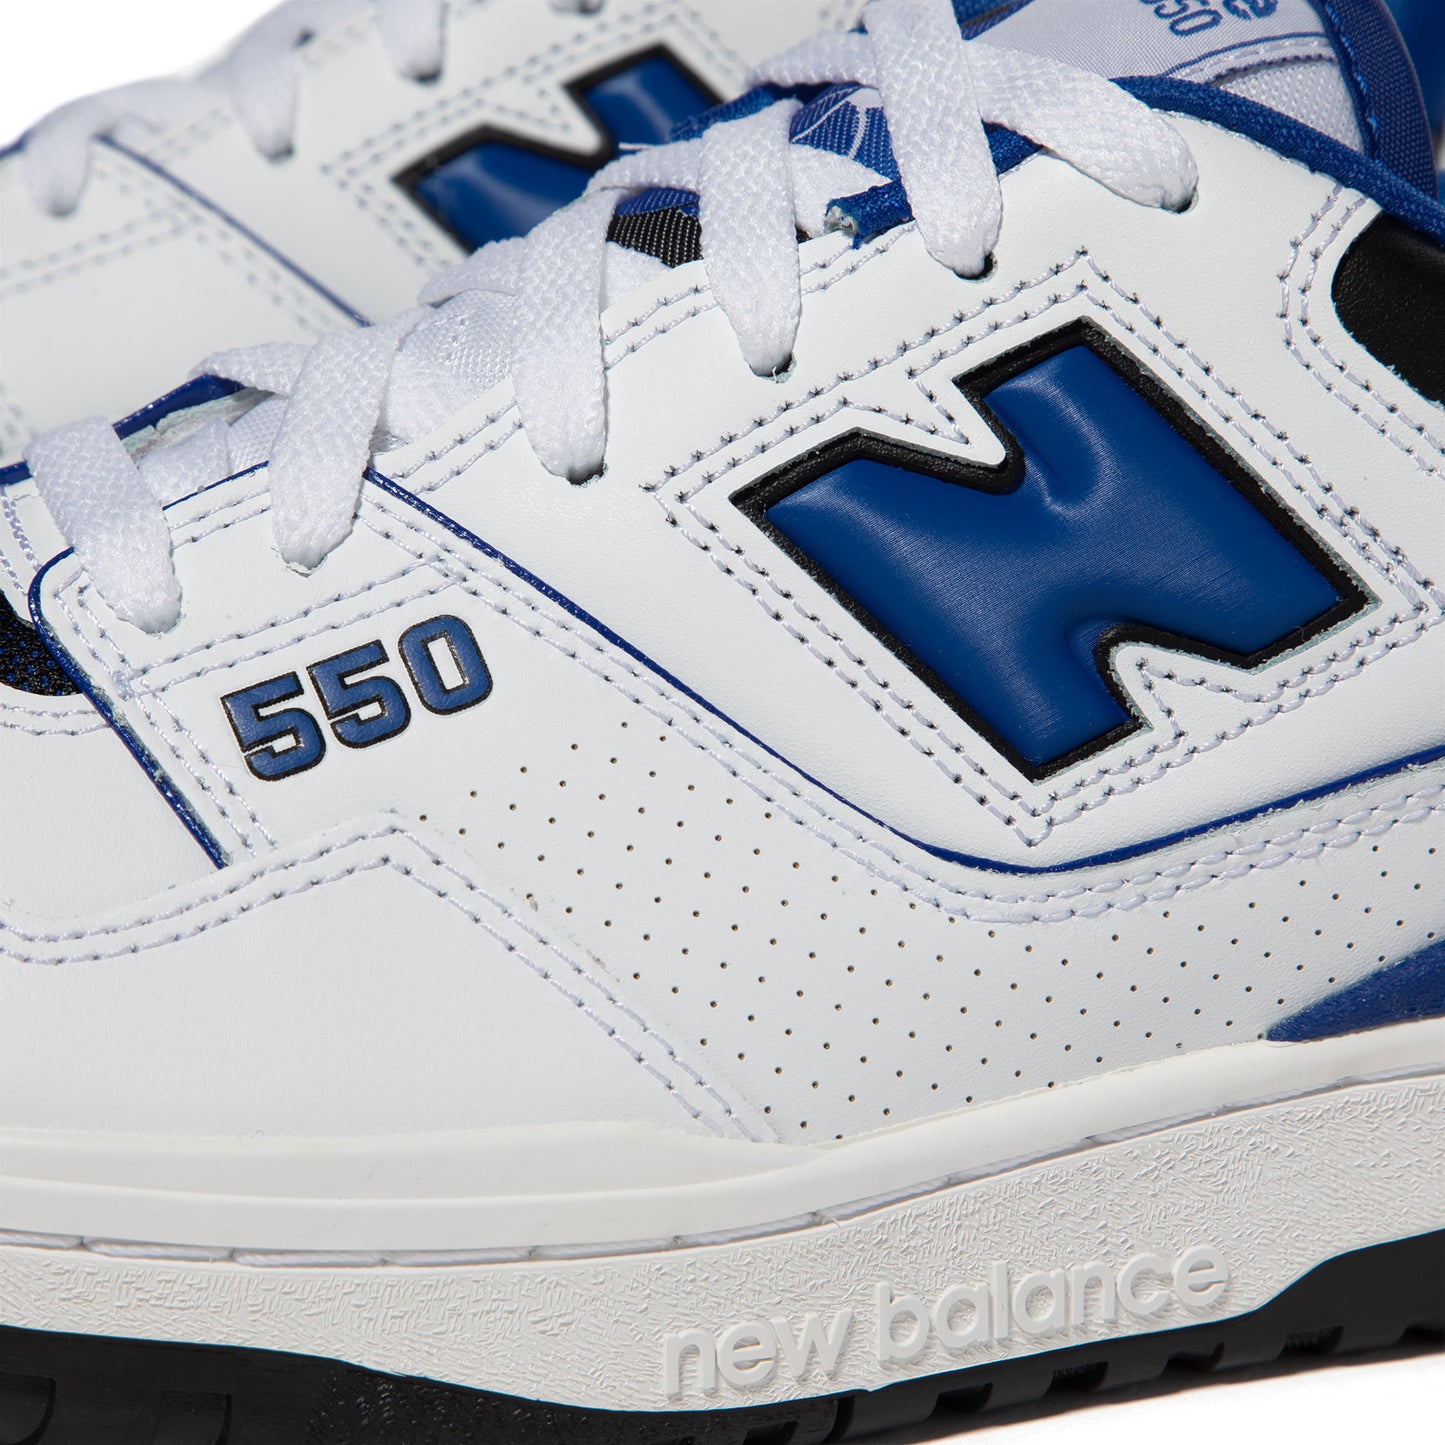 New Balance 550 (White/Blue)